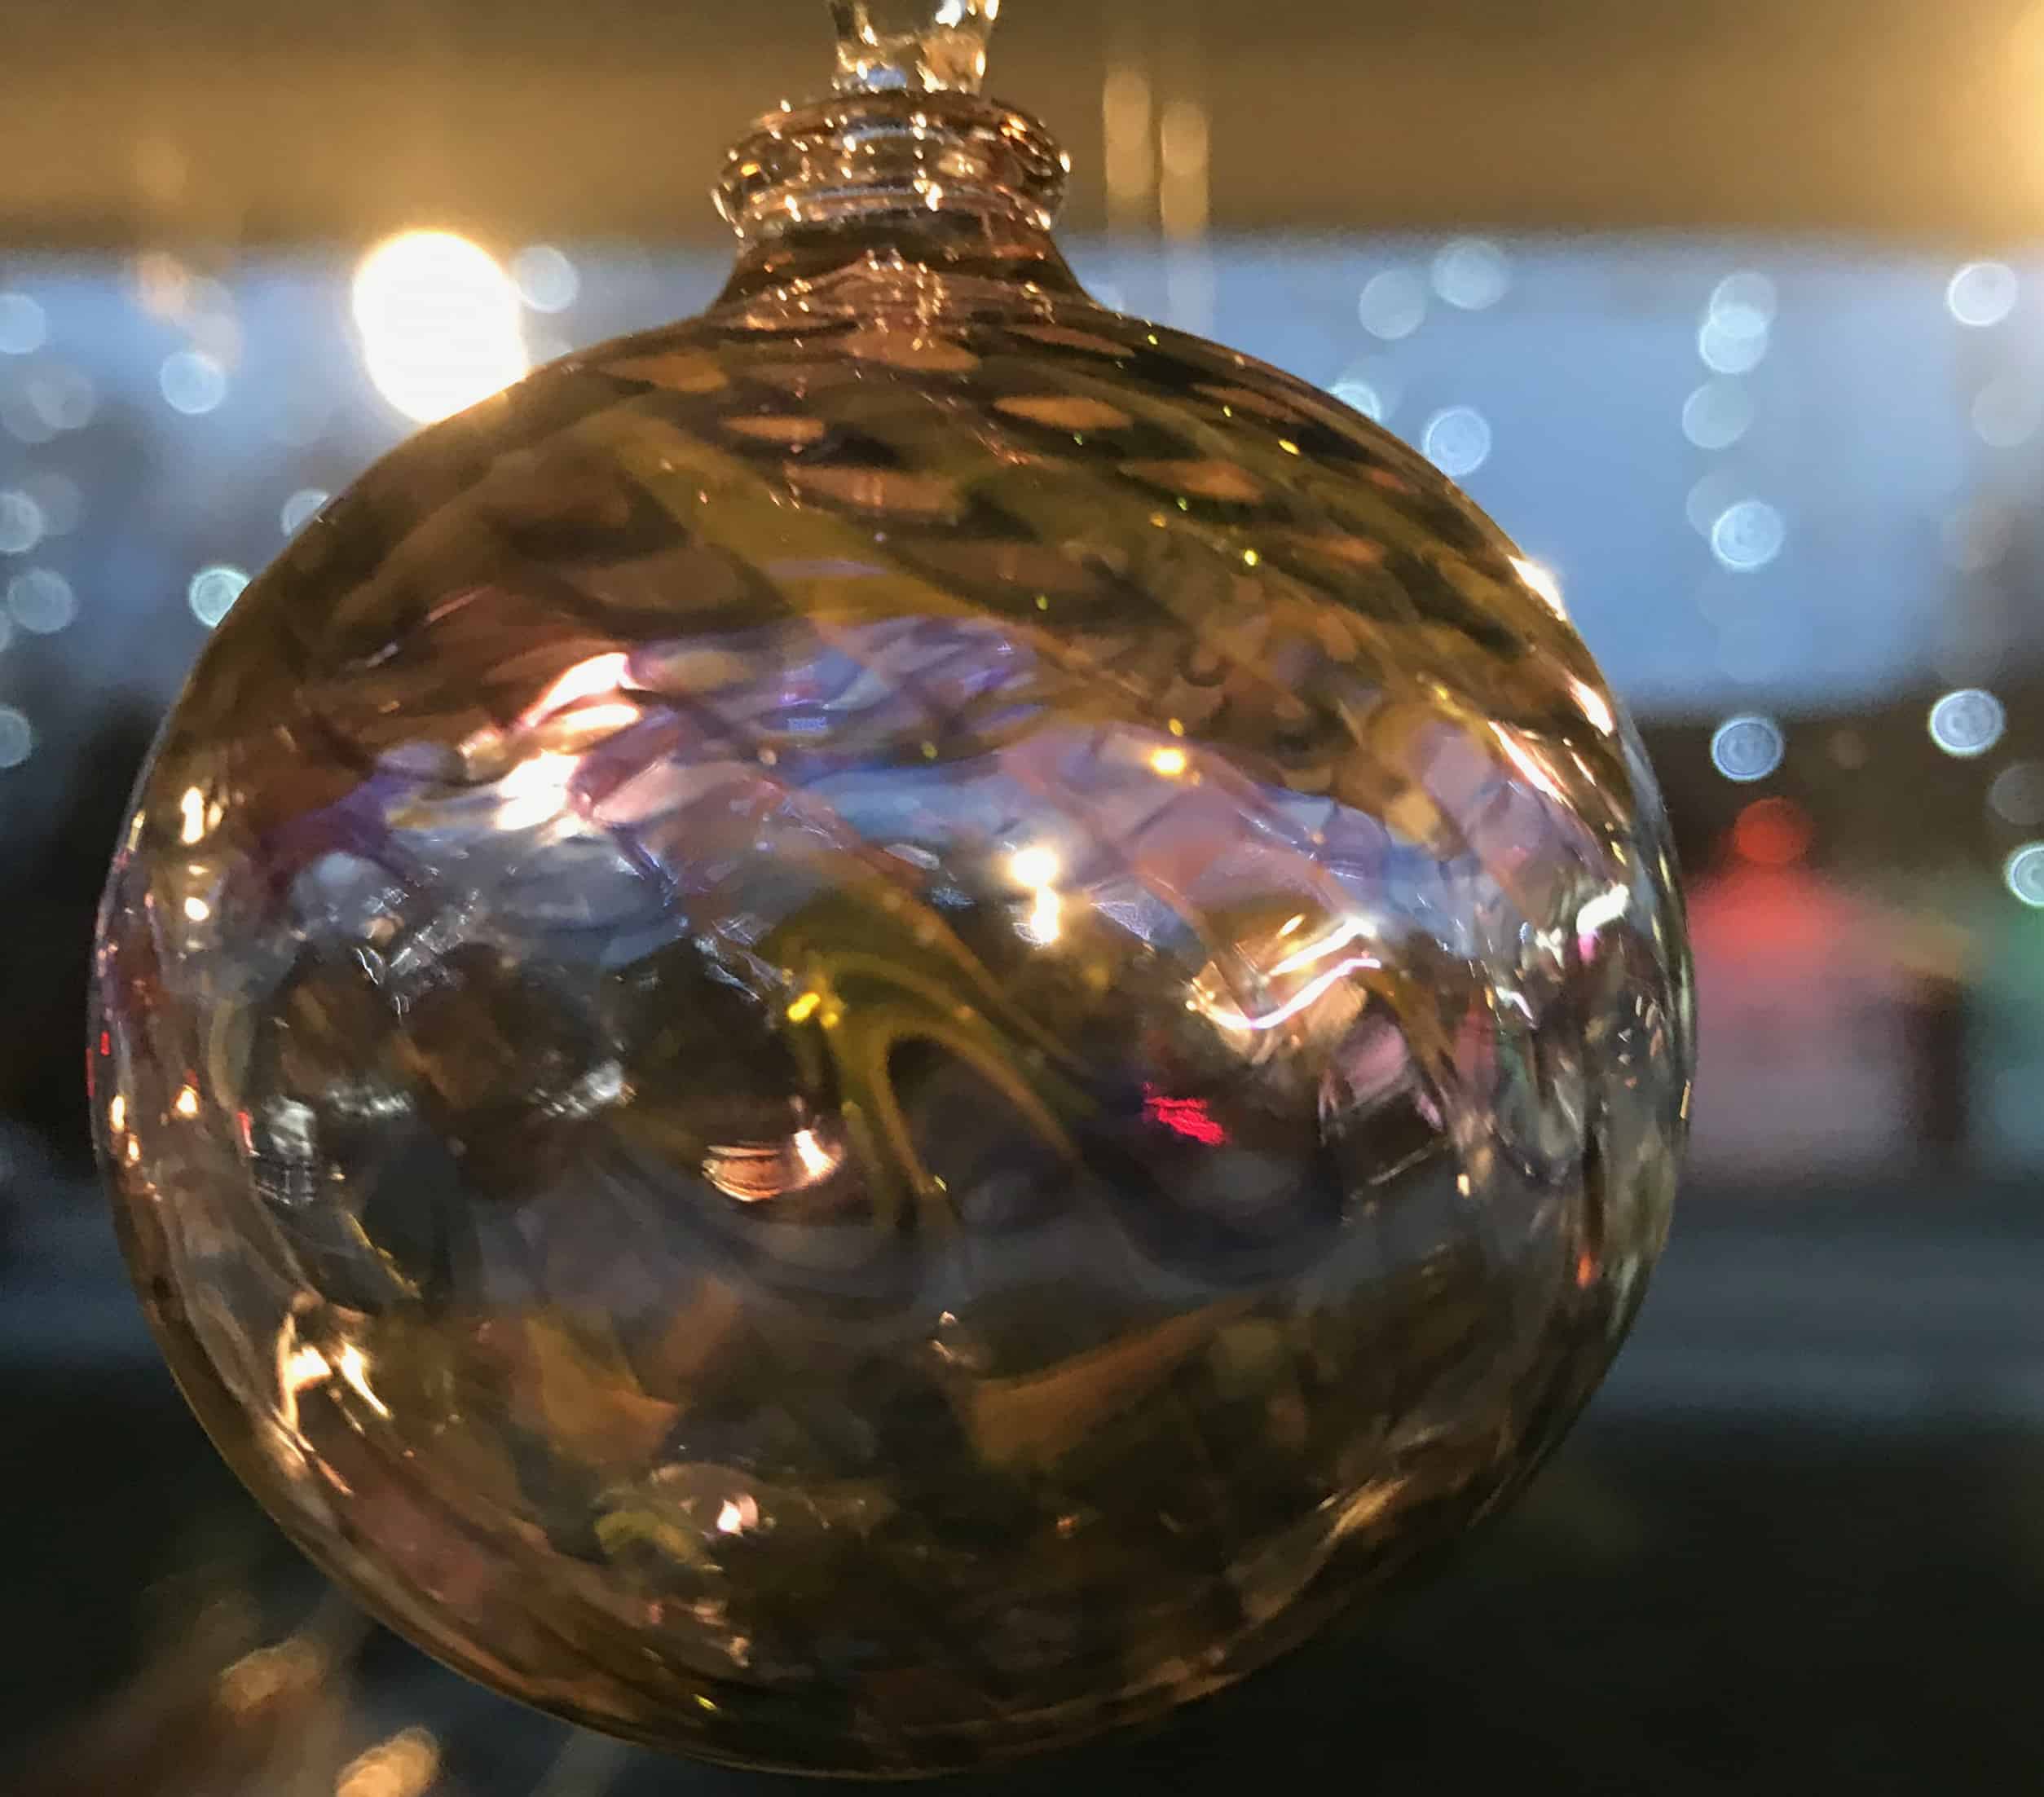 A handmade glass ornament glistens at Cheshire Glassworks.